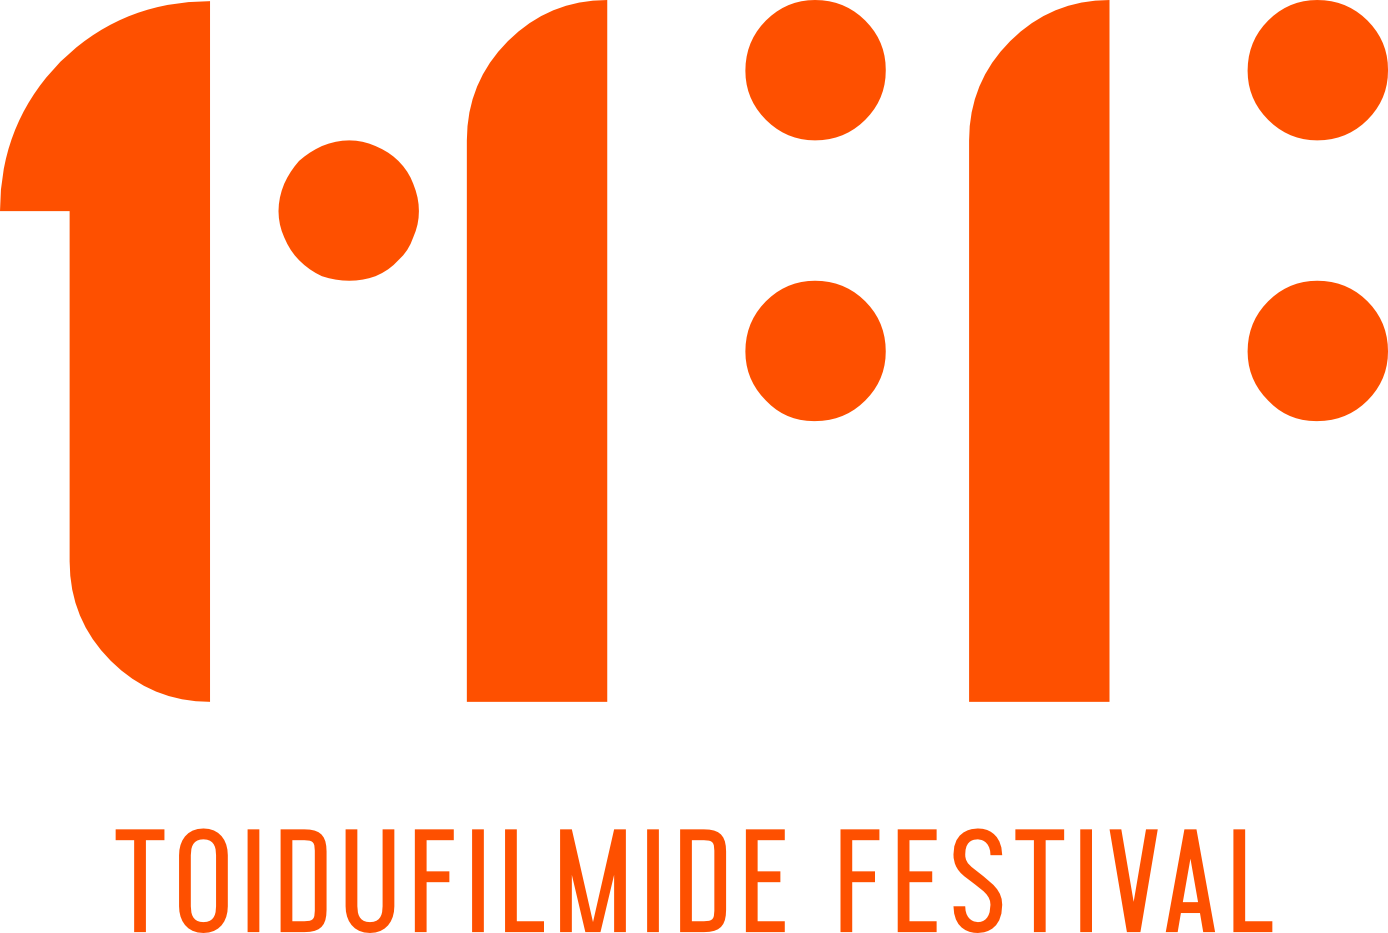 Toidufilmide festival